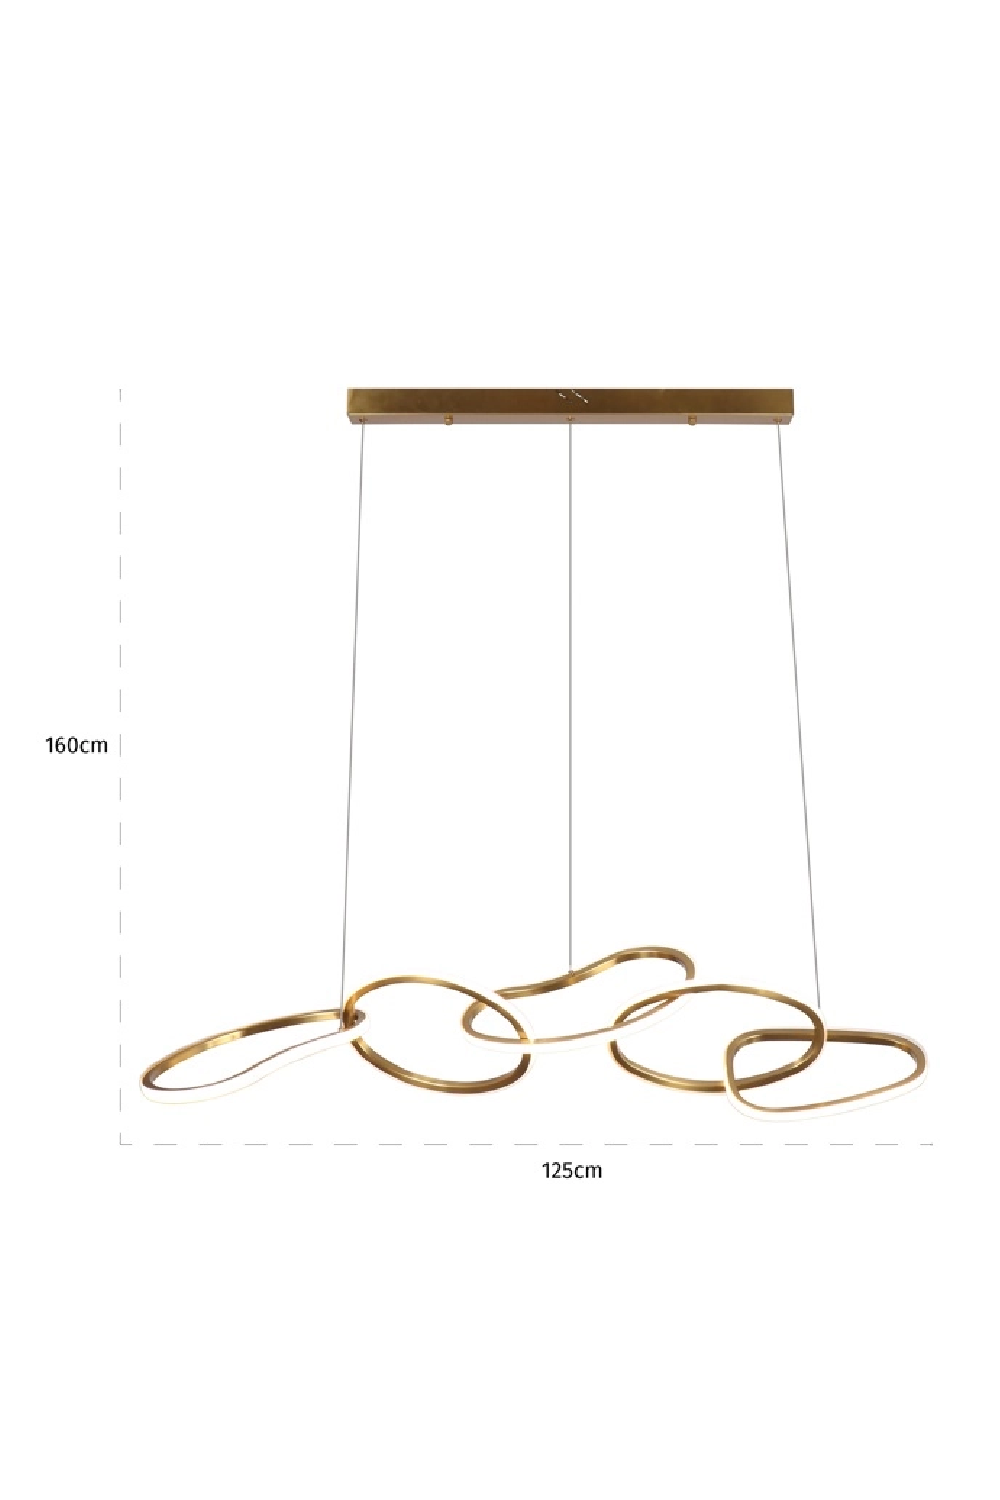 Golden Looped Hanging Lamp | OROA Flyn | Oroa.com